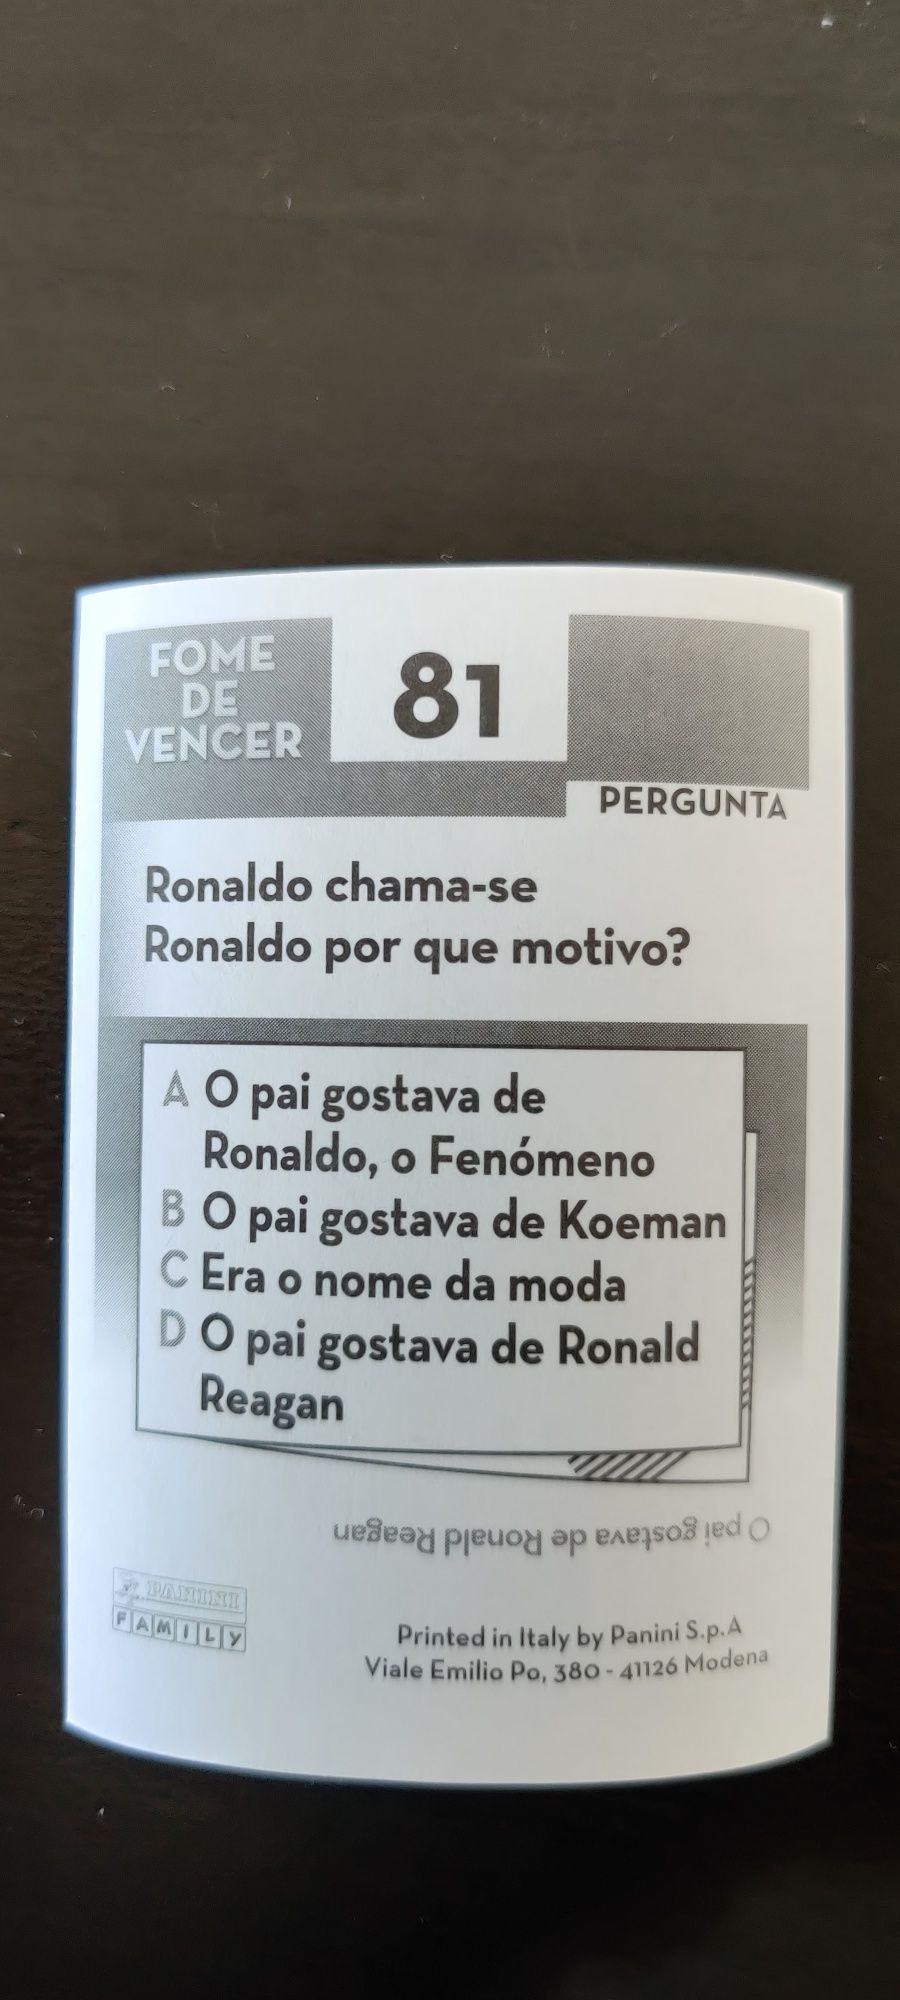 Cristiano Ronaldo Cromo Panini Dourado